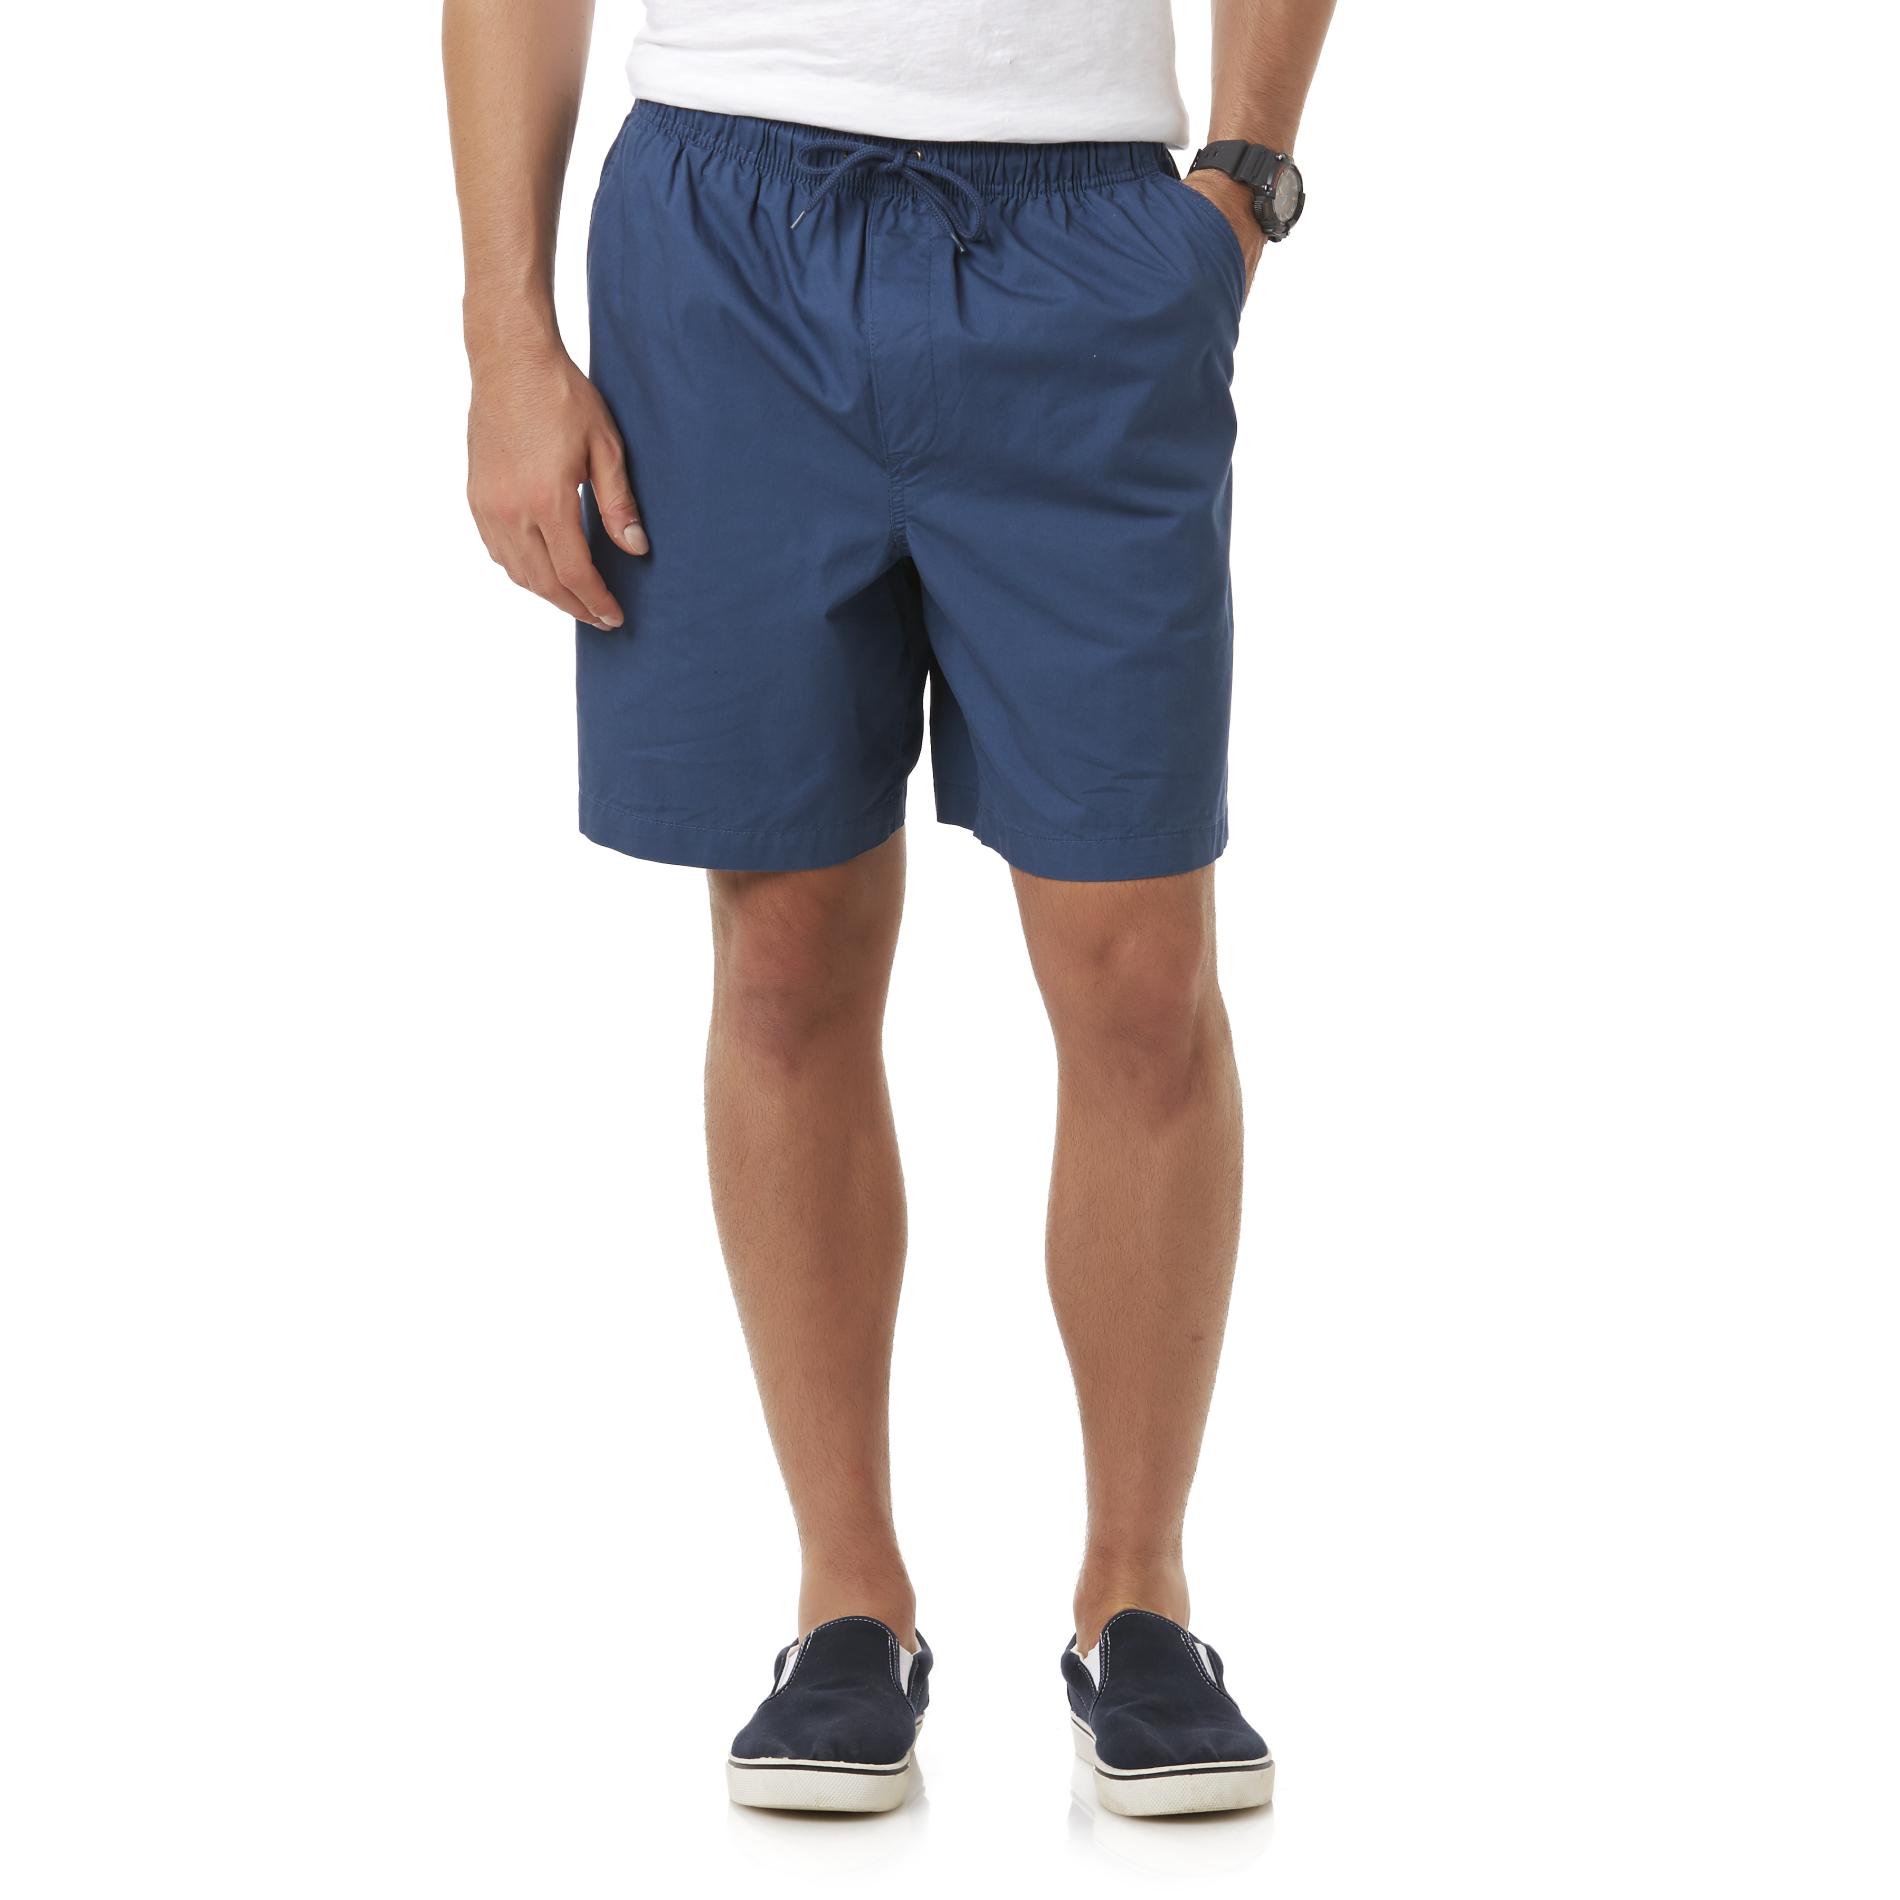 Basic Editions Men's Shorts